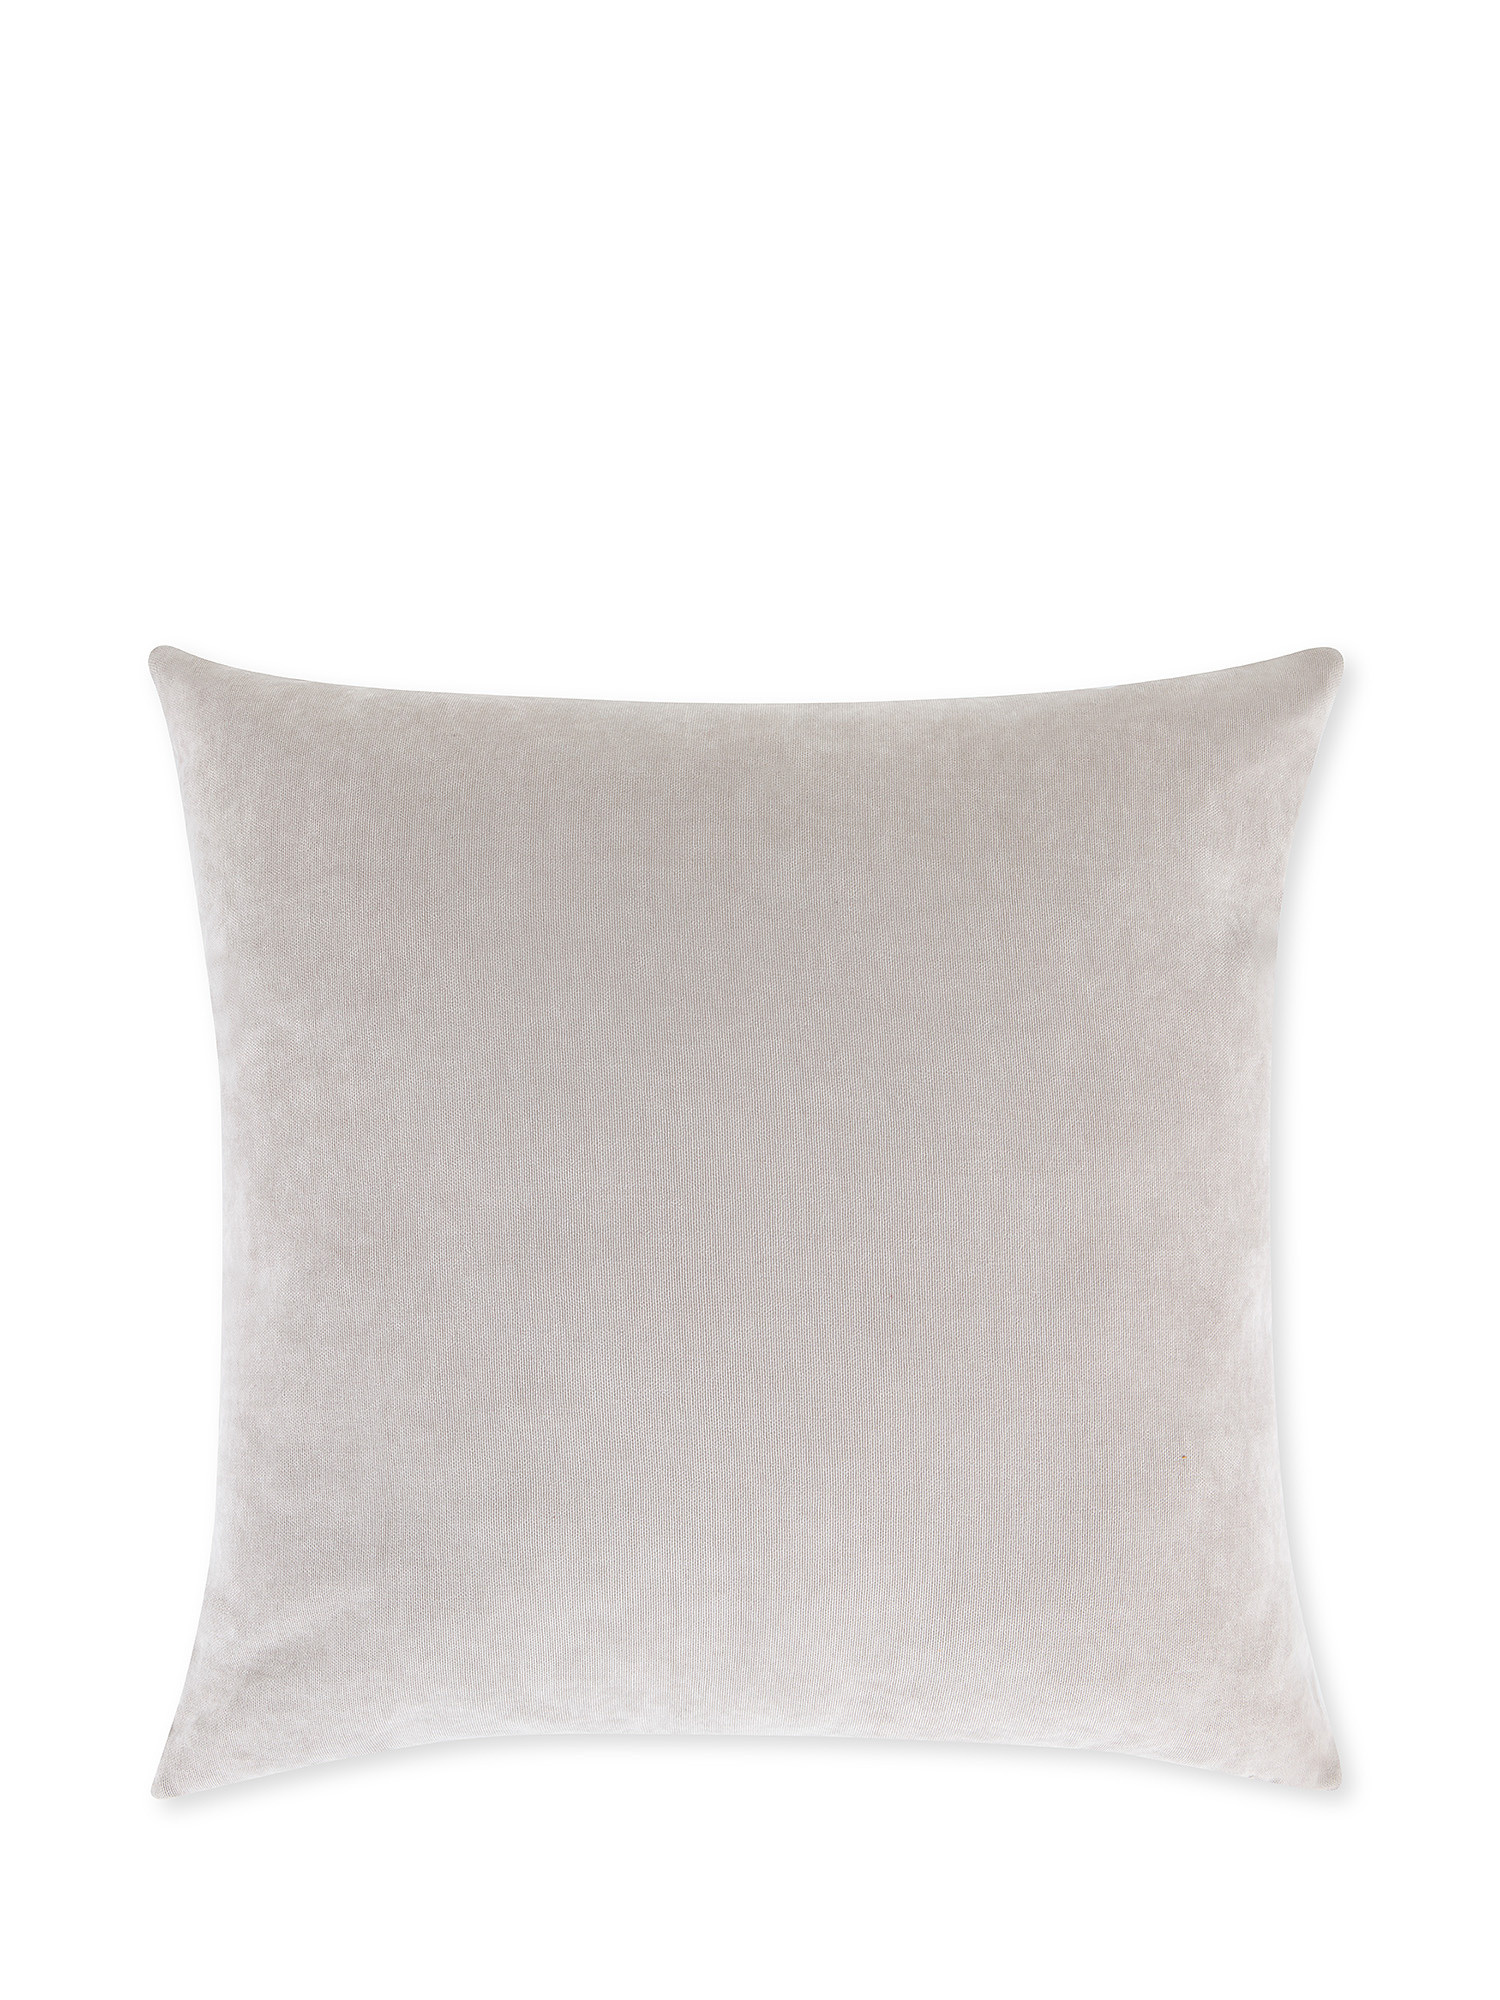 Jacquard cushion with geometric motif 50x50cm, Grey, large image number 1